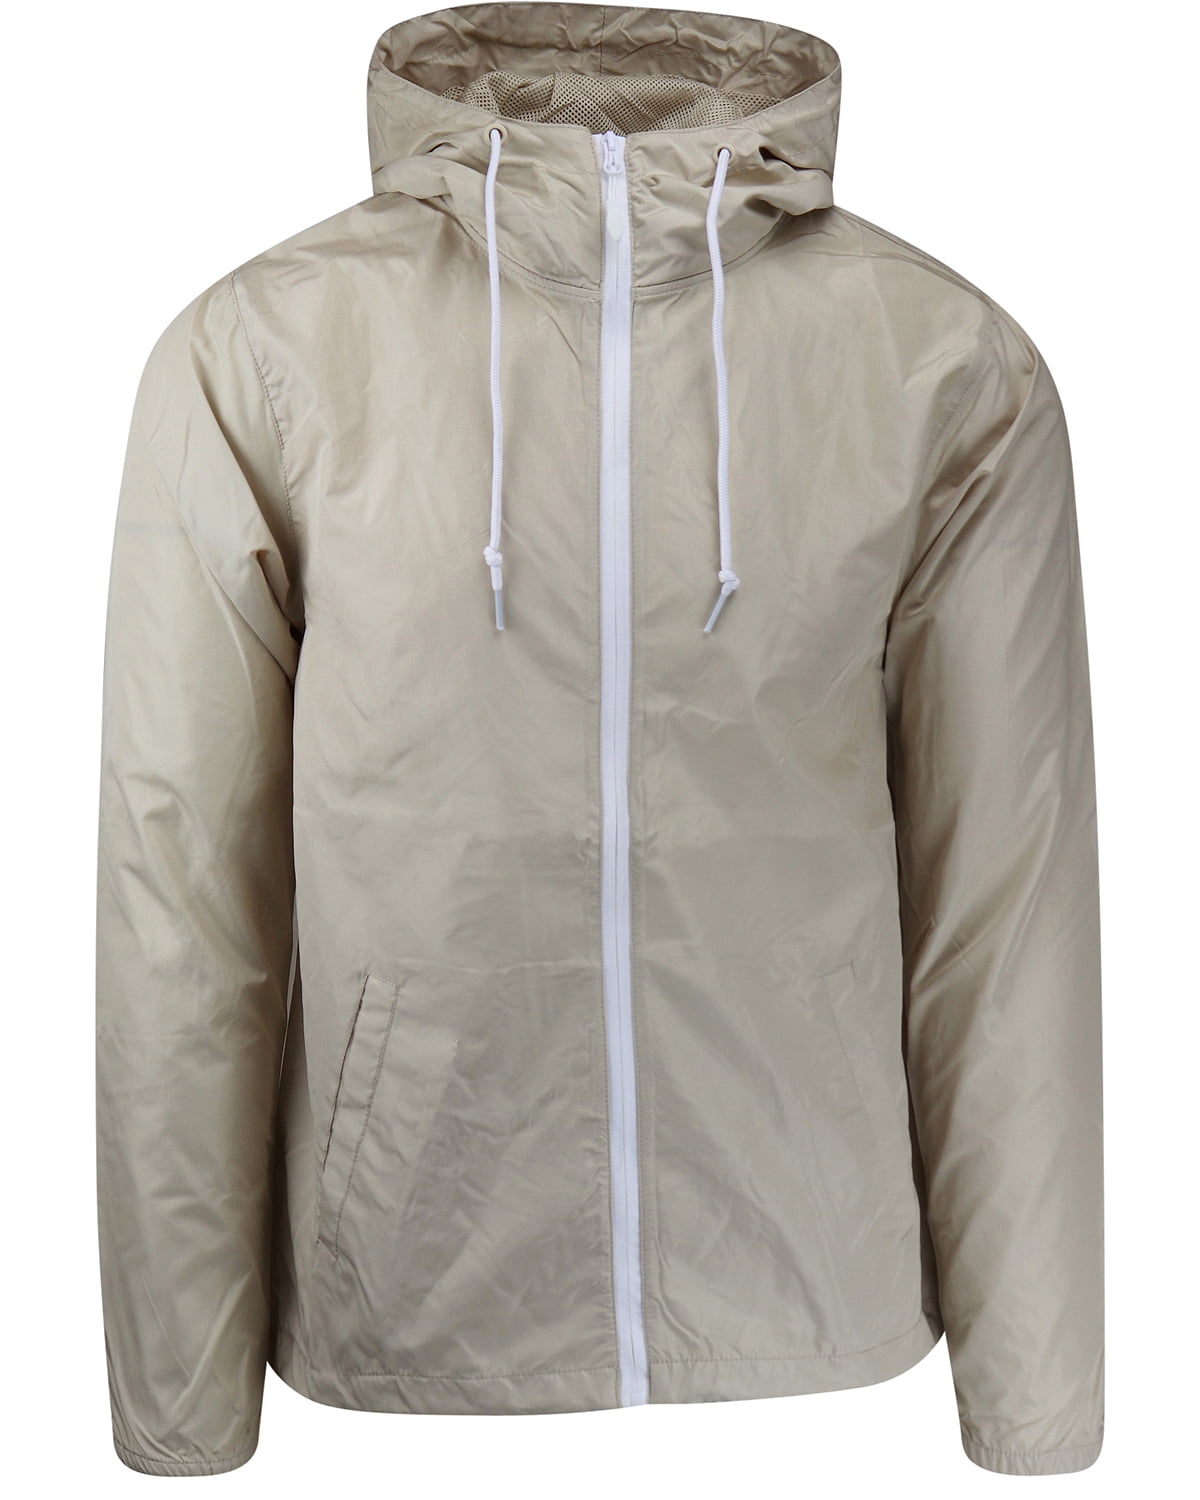 Girls Windbreaker Aqua Waterproof Raincoat Jacket Lightweight Contrast Panels